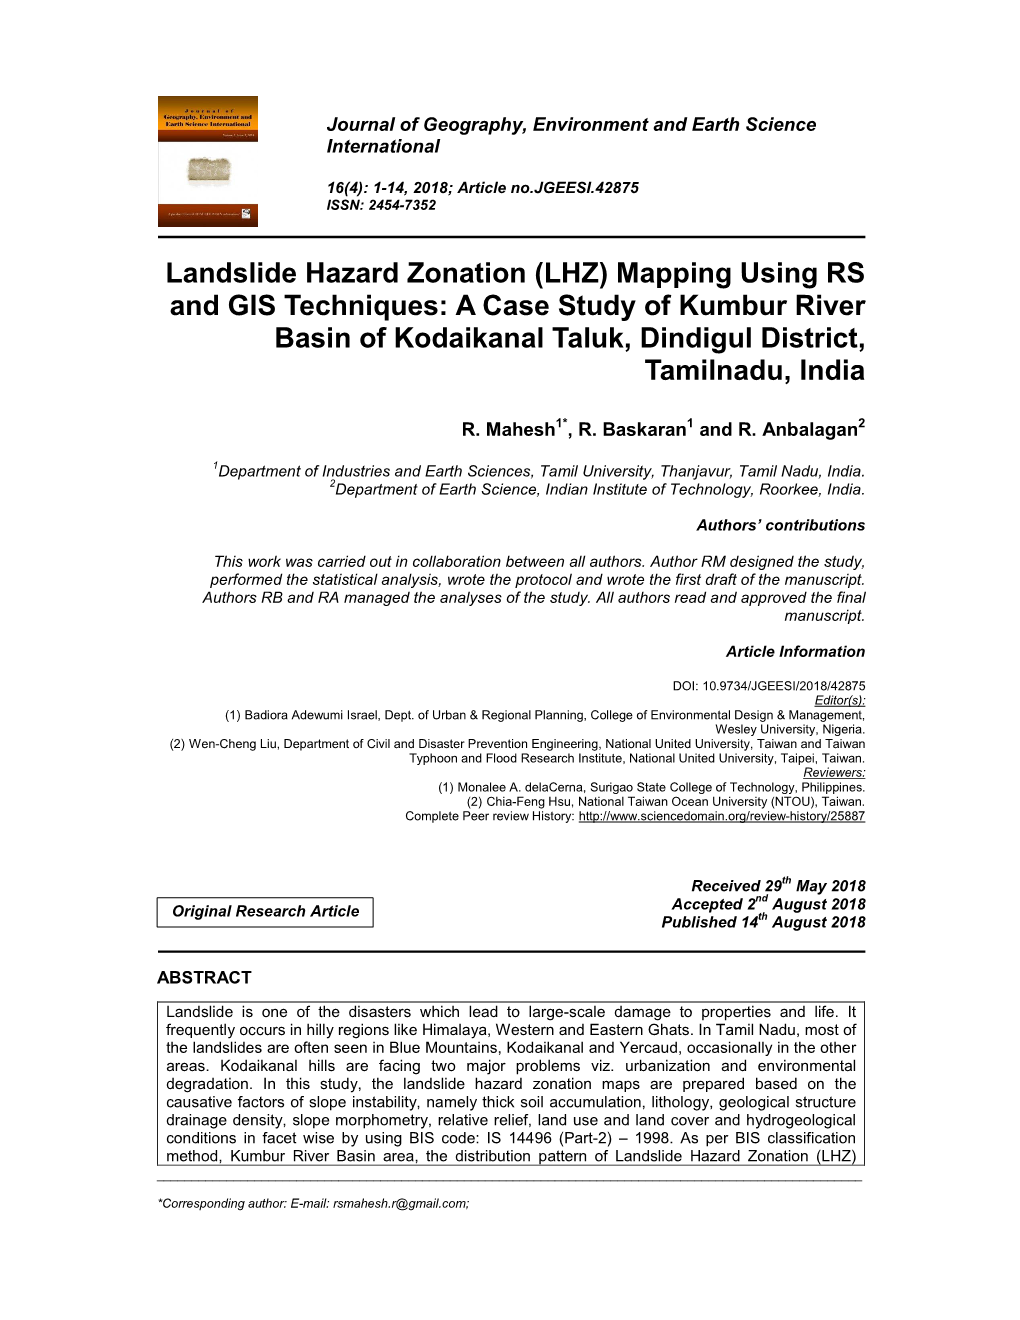 Landslide Hazard Zonation (LHZ) Mapping Using RS and GIS Techniques: a Case Study of Kumbur River Basin of Kodaikanal Taluk, Dindigul District, Tamilnadu, India